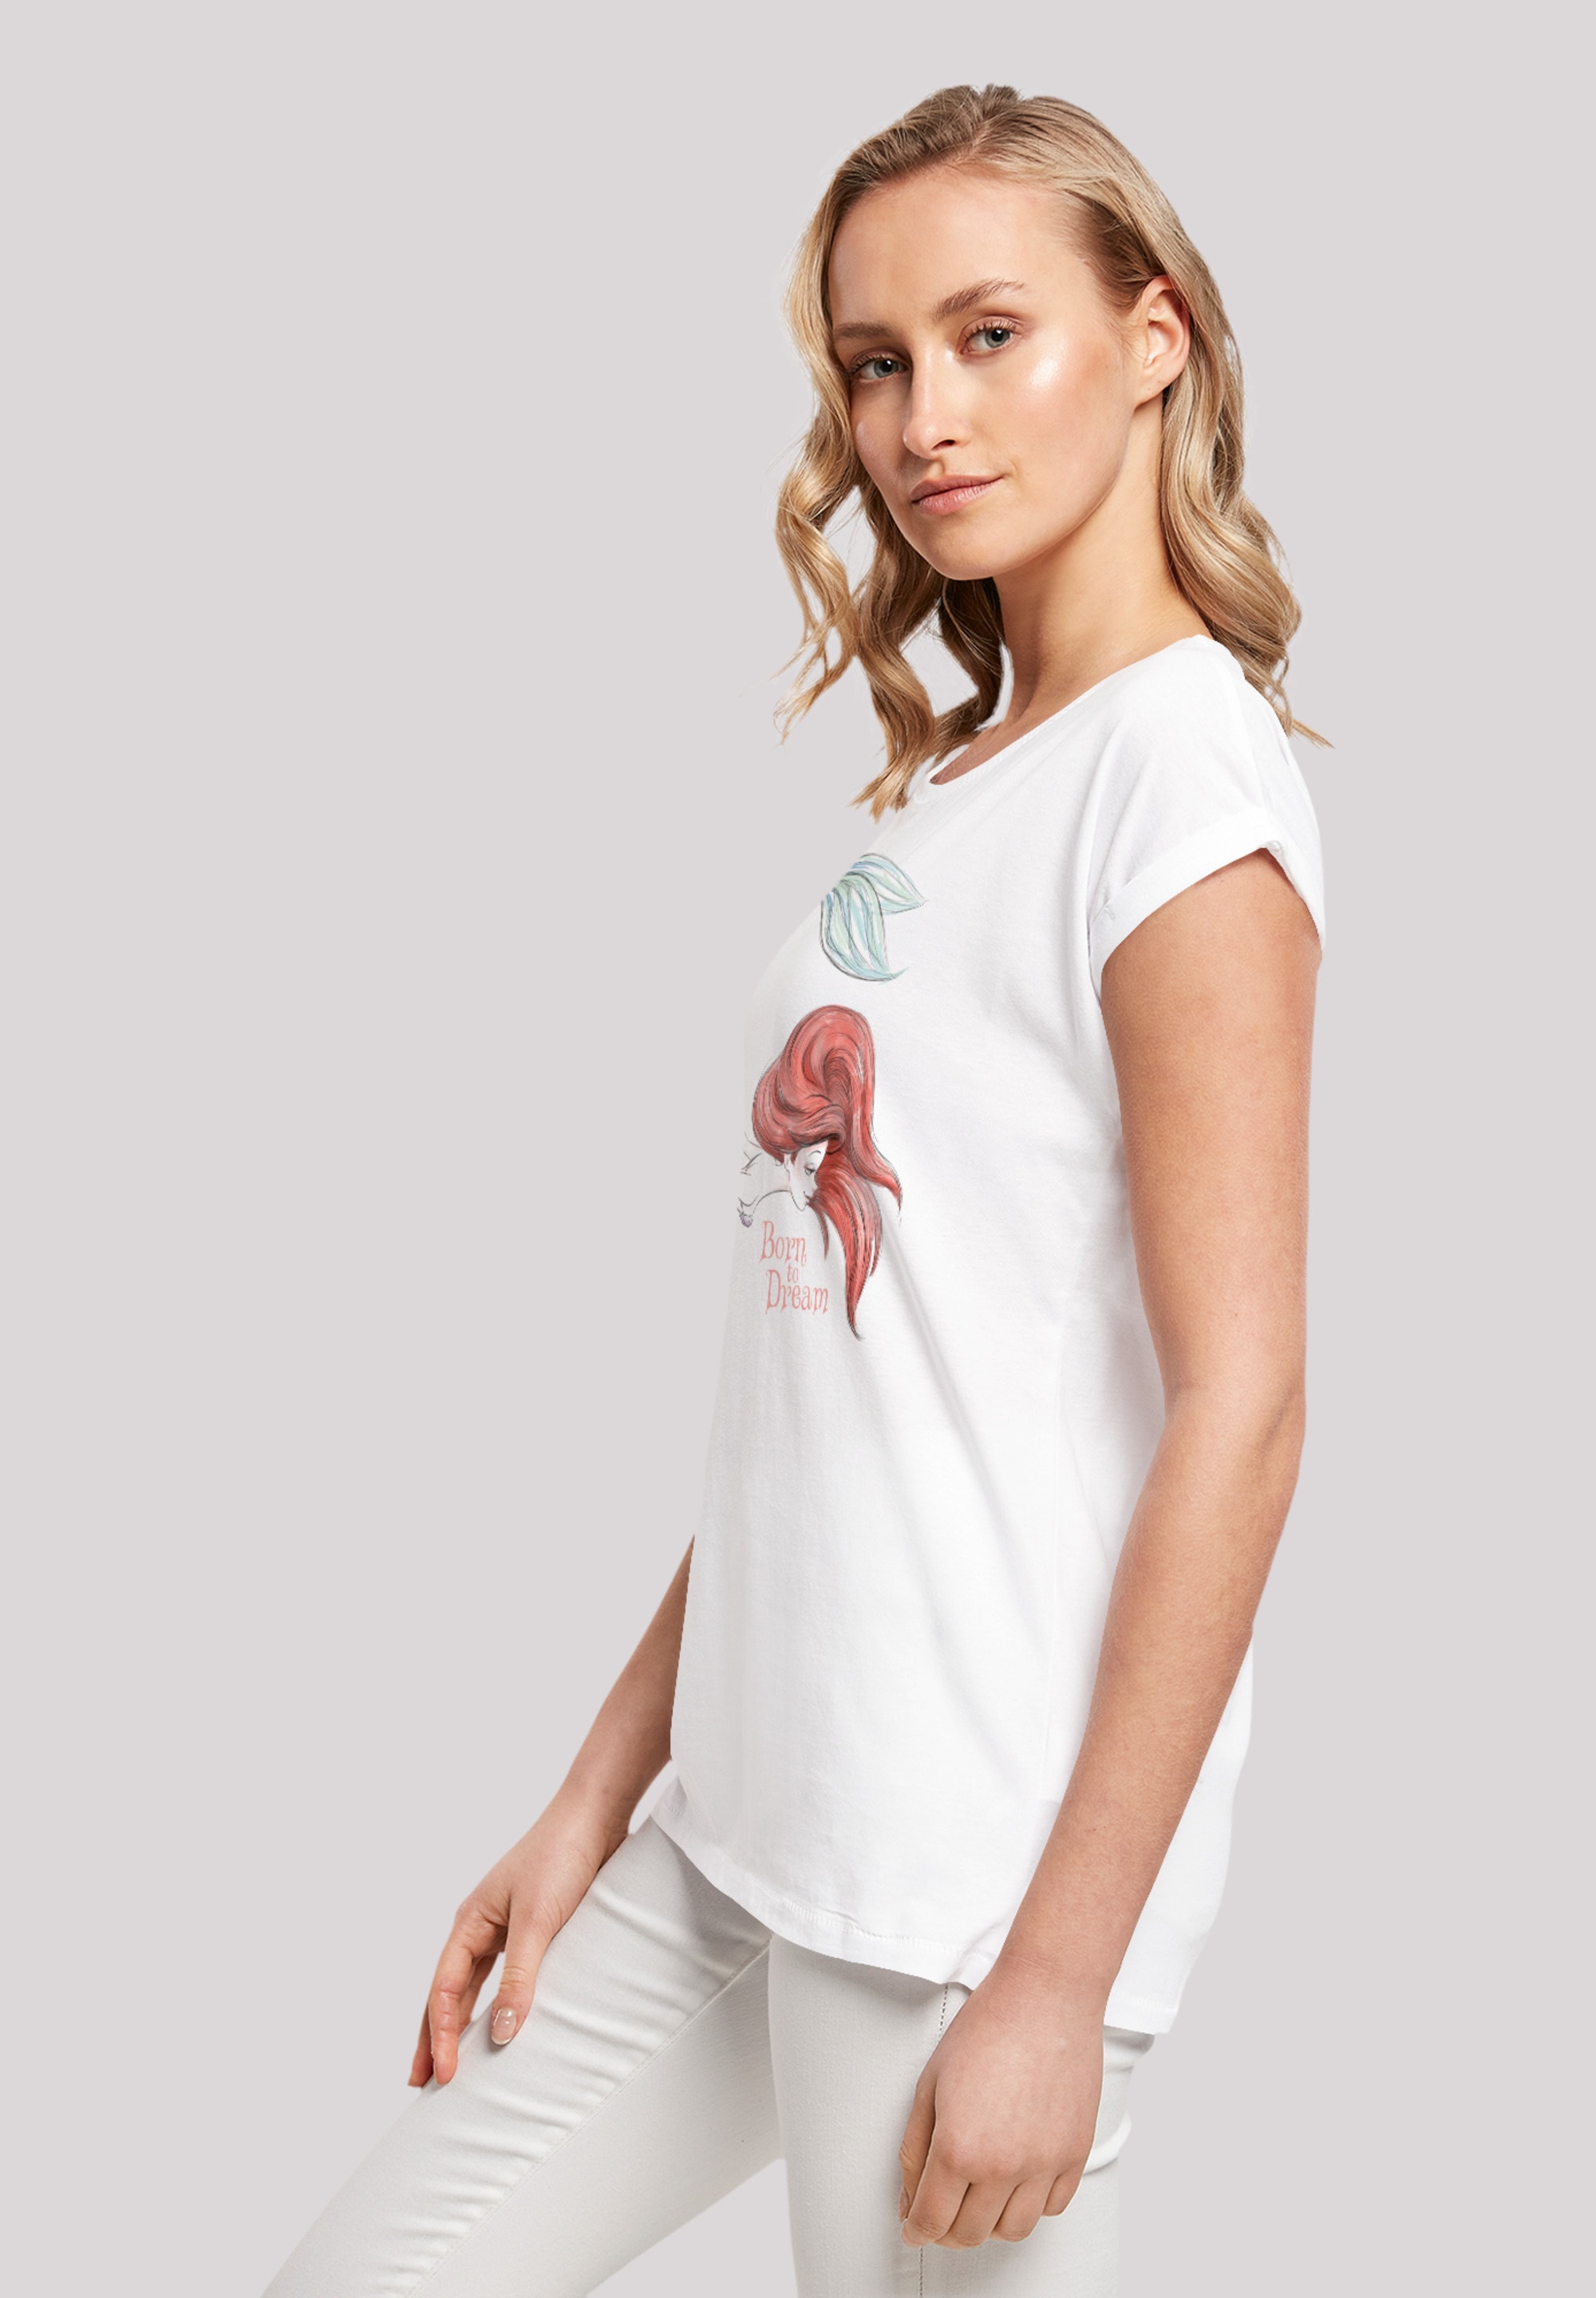 F4NT4STIC T-Shirt »Disney Arielle walking Born online | Dream«, Qualität kaufen I\'m Premium To